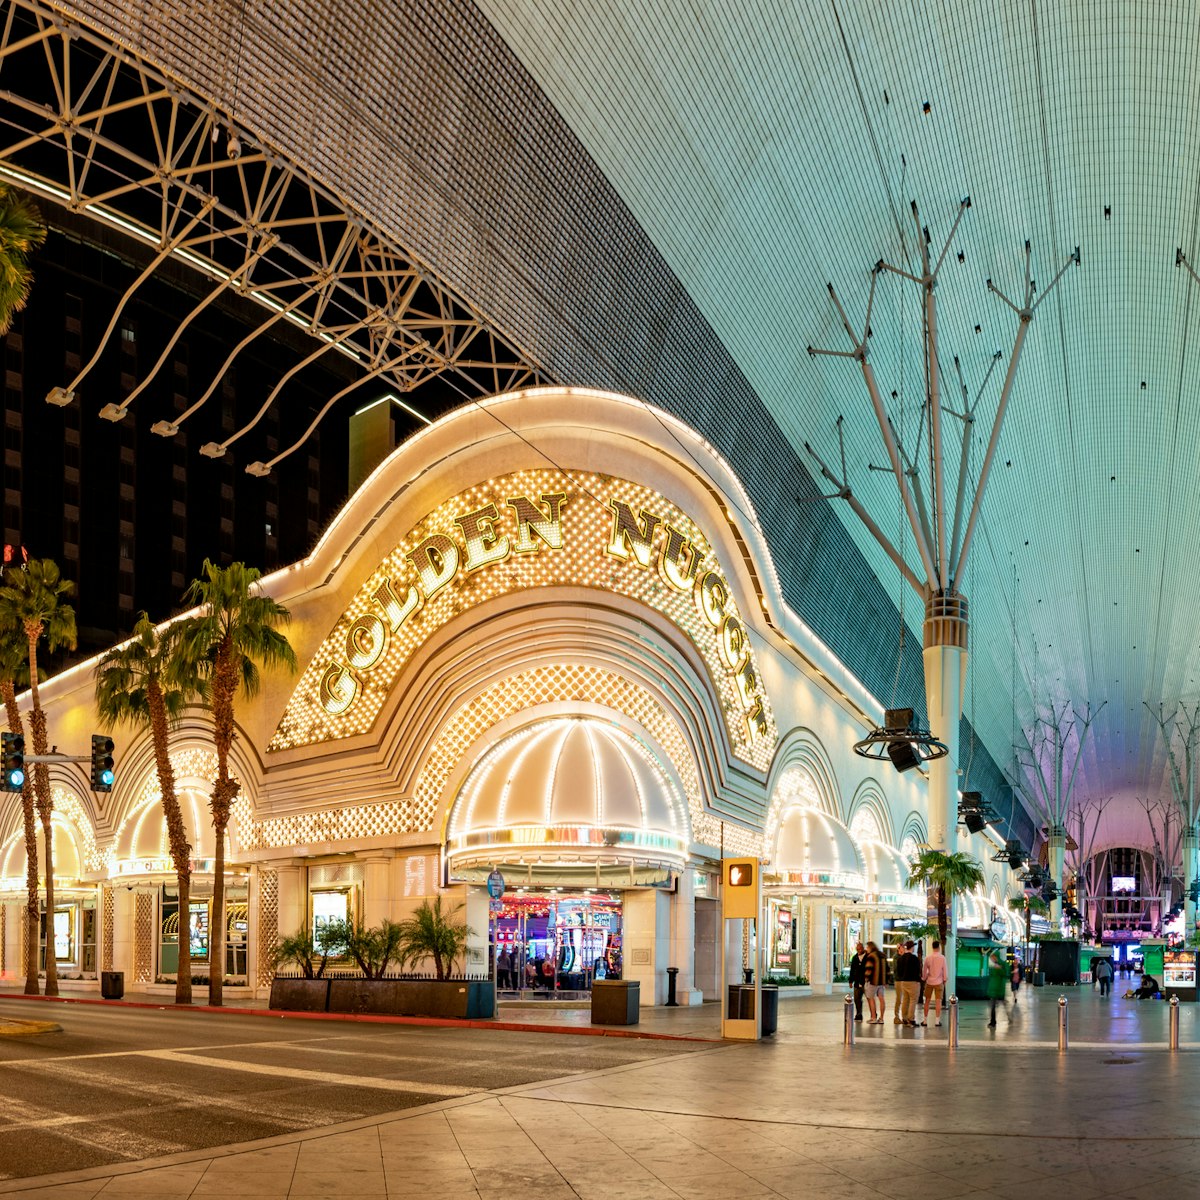 Las Vegas, USA - March 11, 2019: casino golden Nugget by night in Fremont street in Las Vegas, USA.
1363548812